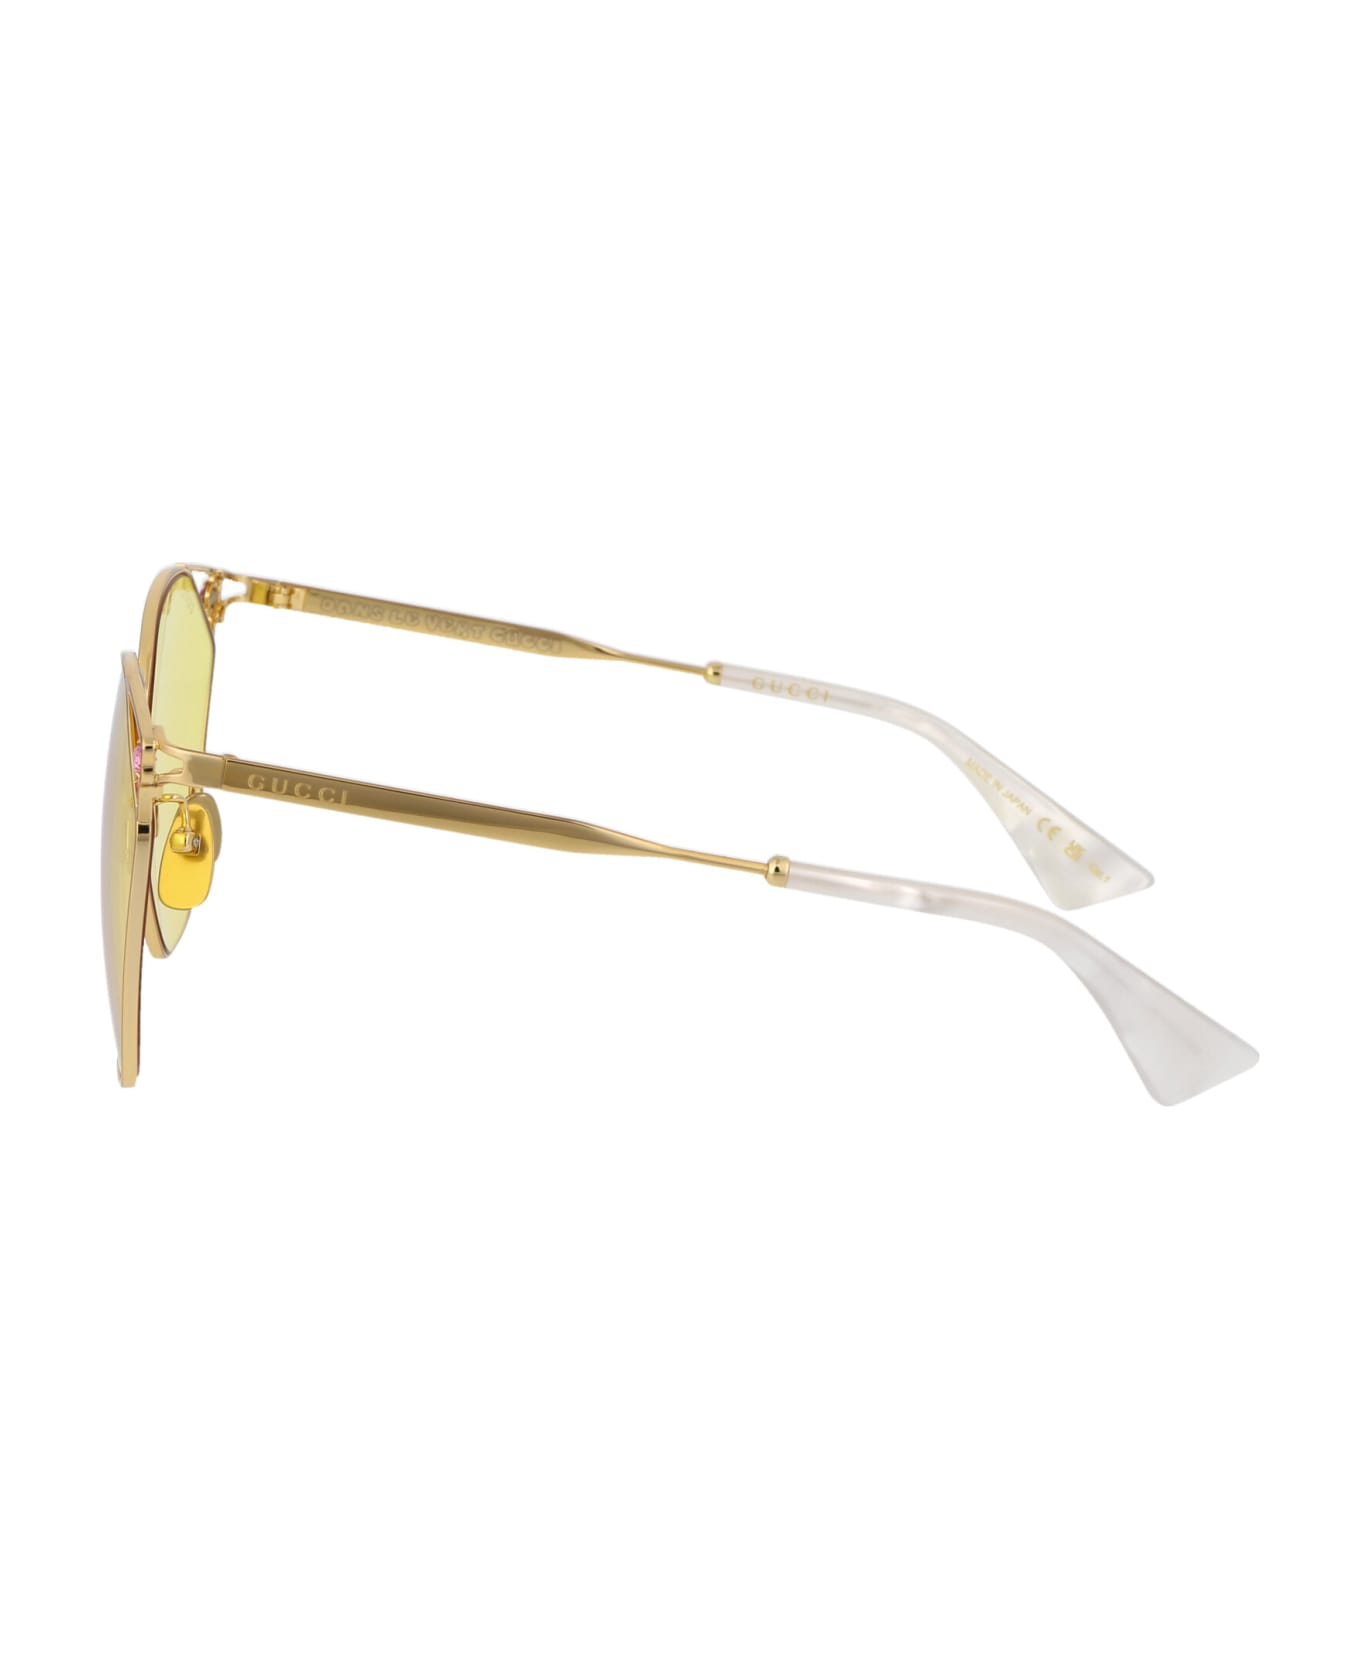 Gucci Eyewear Gg1375sa Sunglasses - 002 GOLD GOLD YELLOW